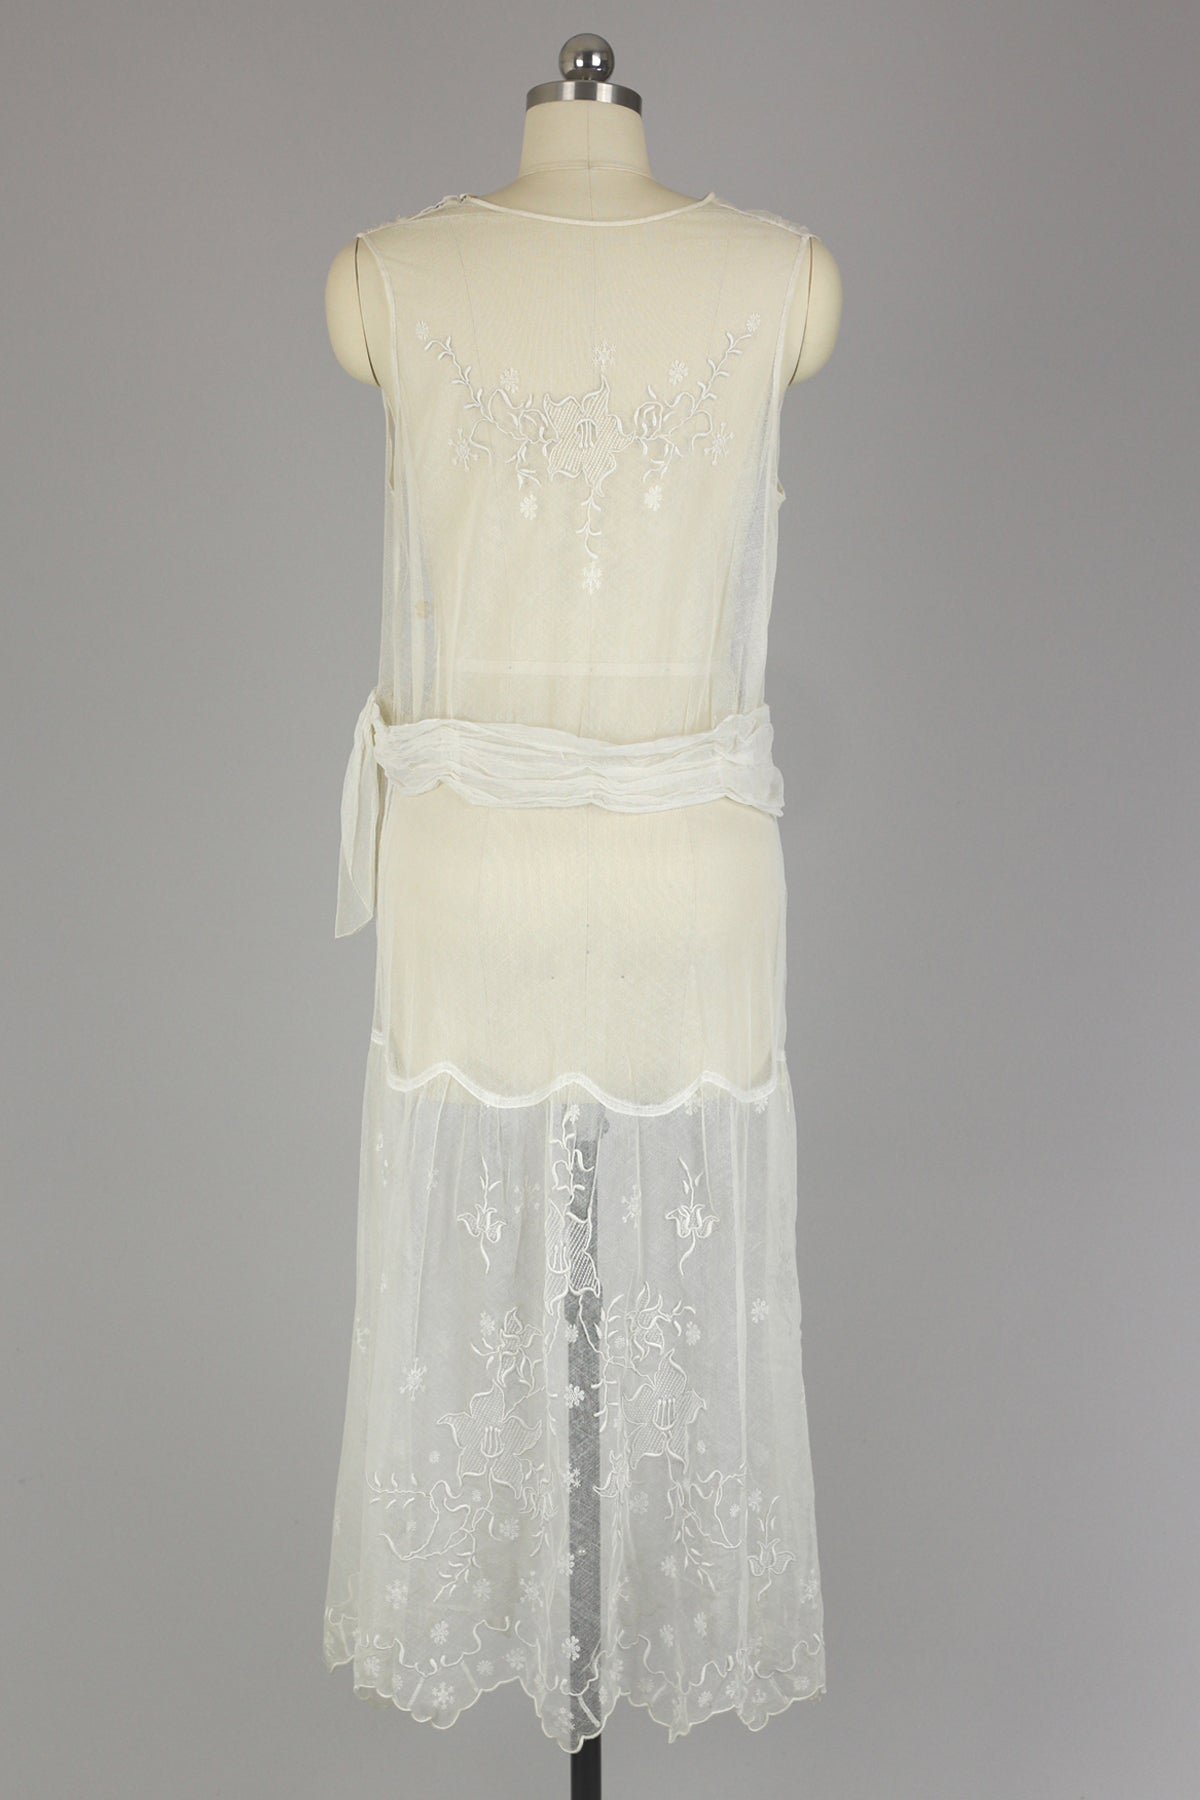 Edwardian 1920s Lace Tea Dress